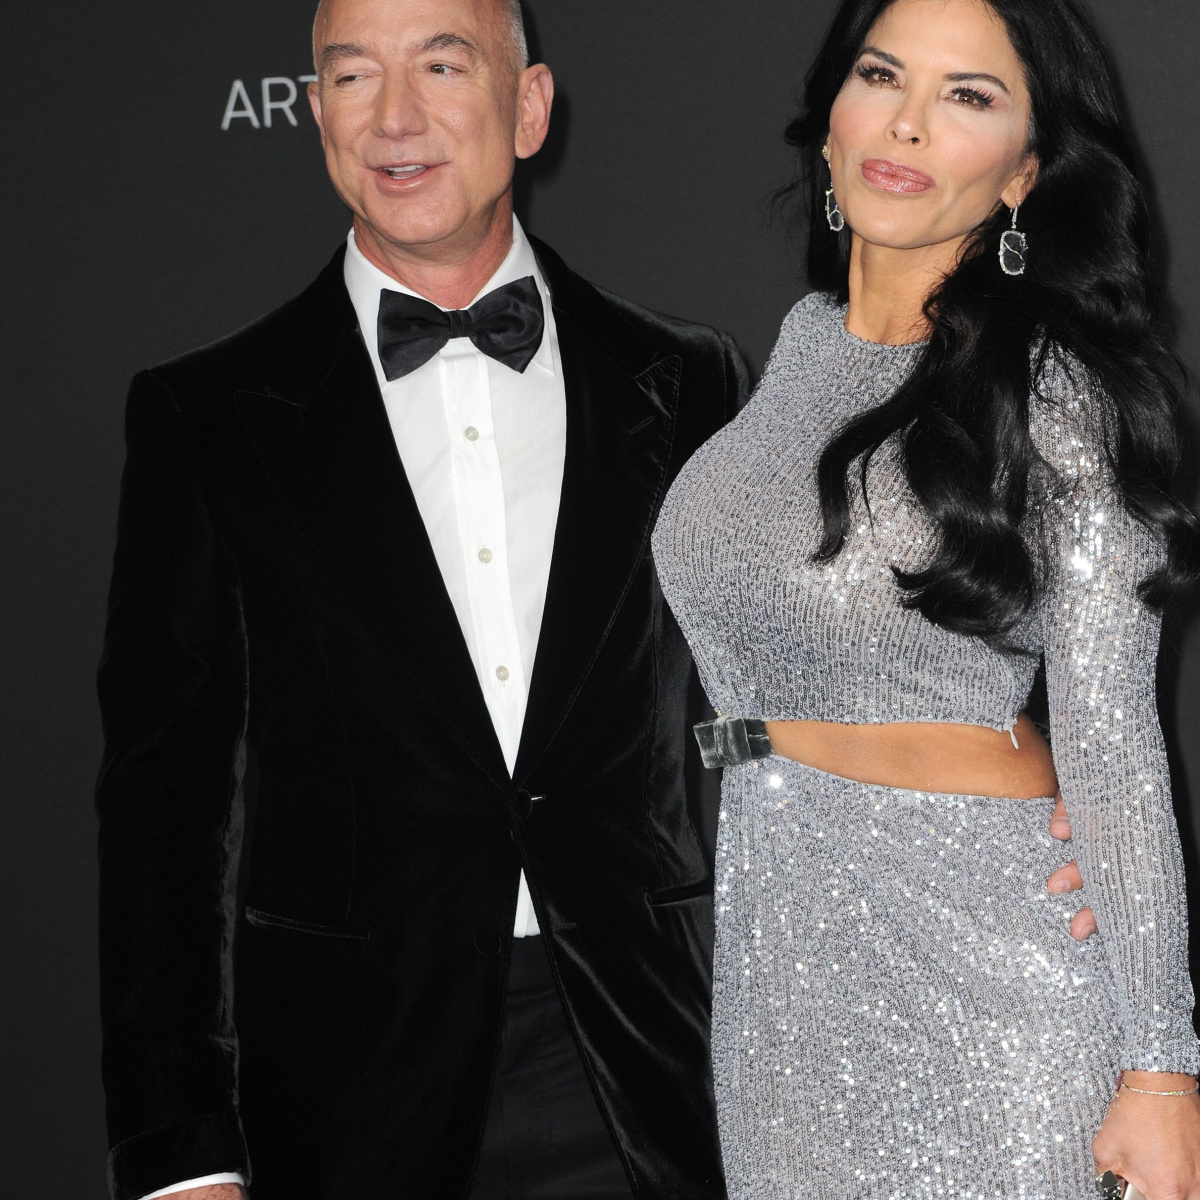 Celebrity Jeff Bezos is engaged to longtime partner Lauren Sanchez, reports say